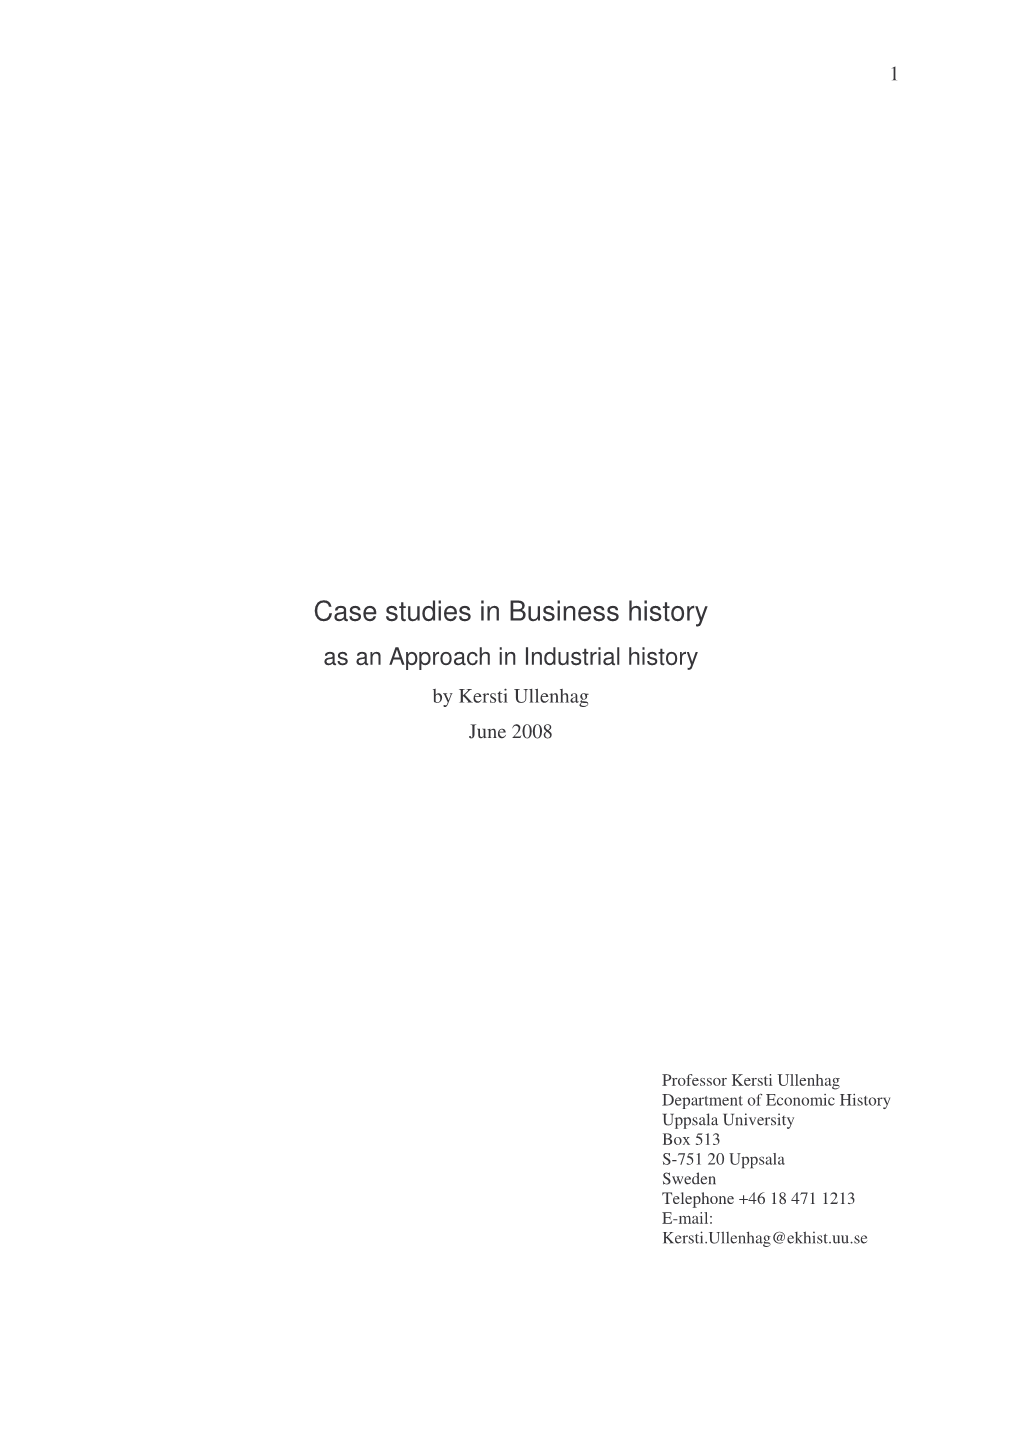 Case Studies in Business History As an Approach in Industrial History by Kersti Ullenhag June 2008